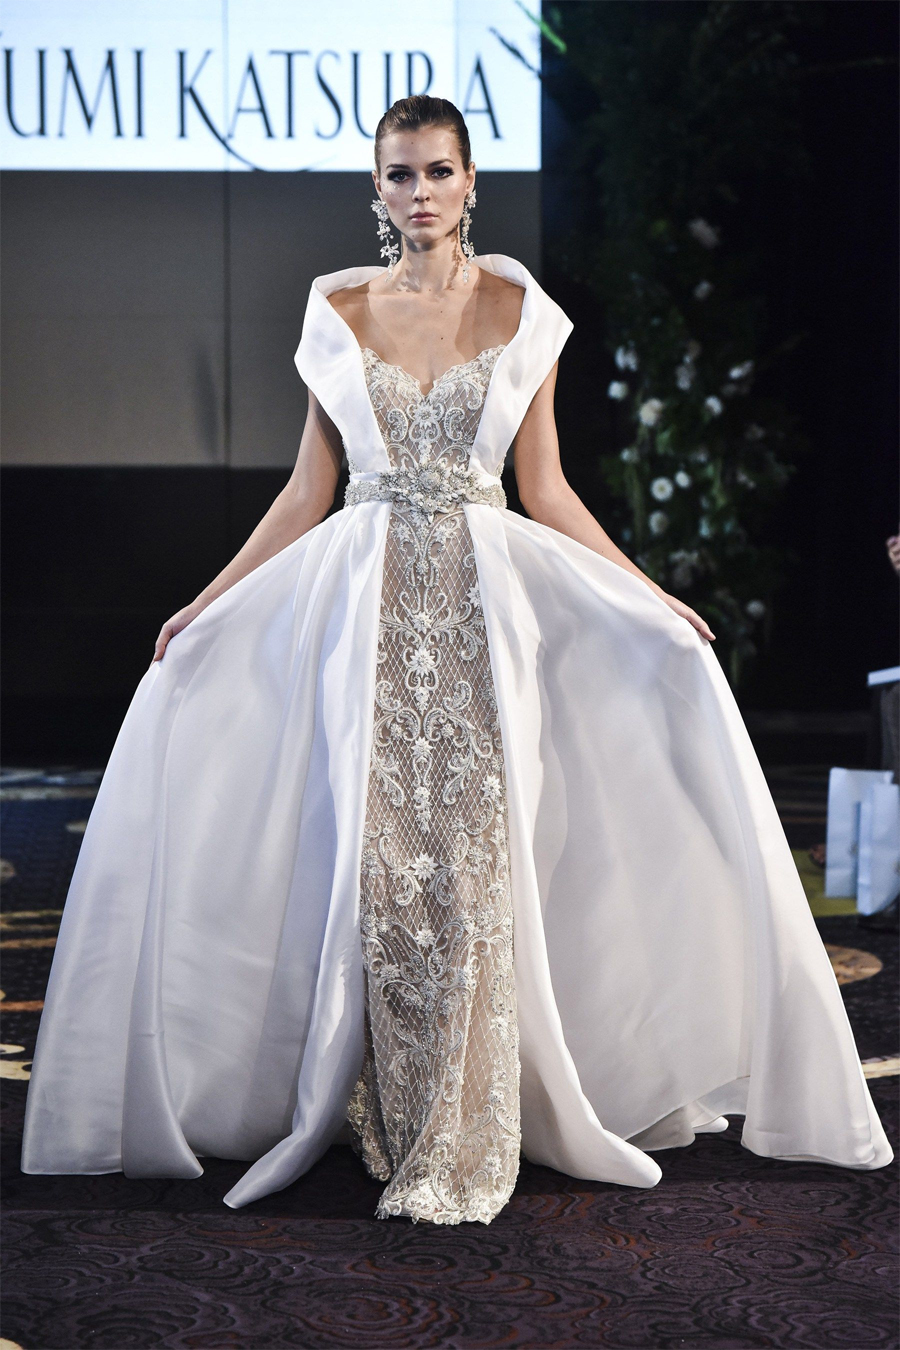 The White Gold Diamond Wedding Dress by Yumi Katsura